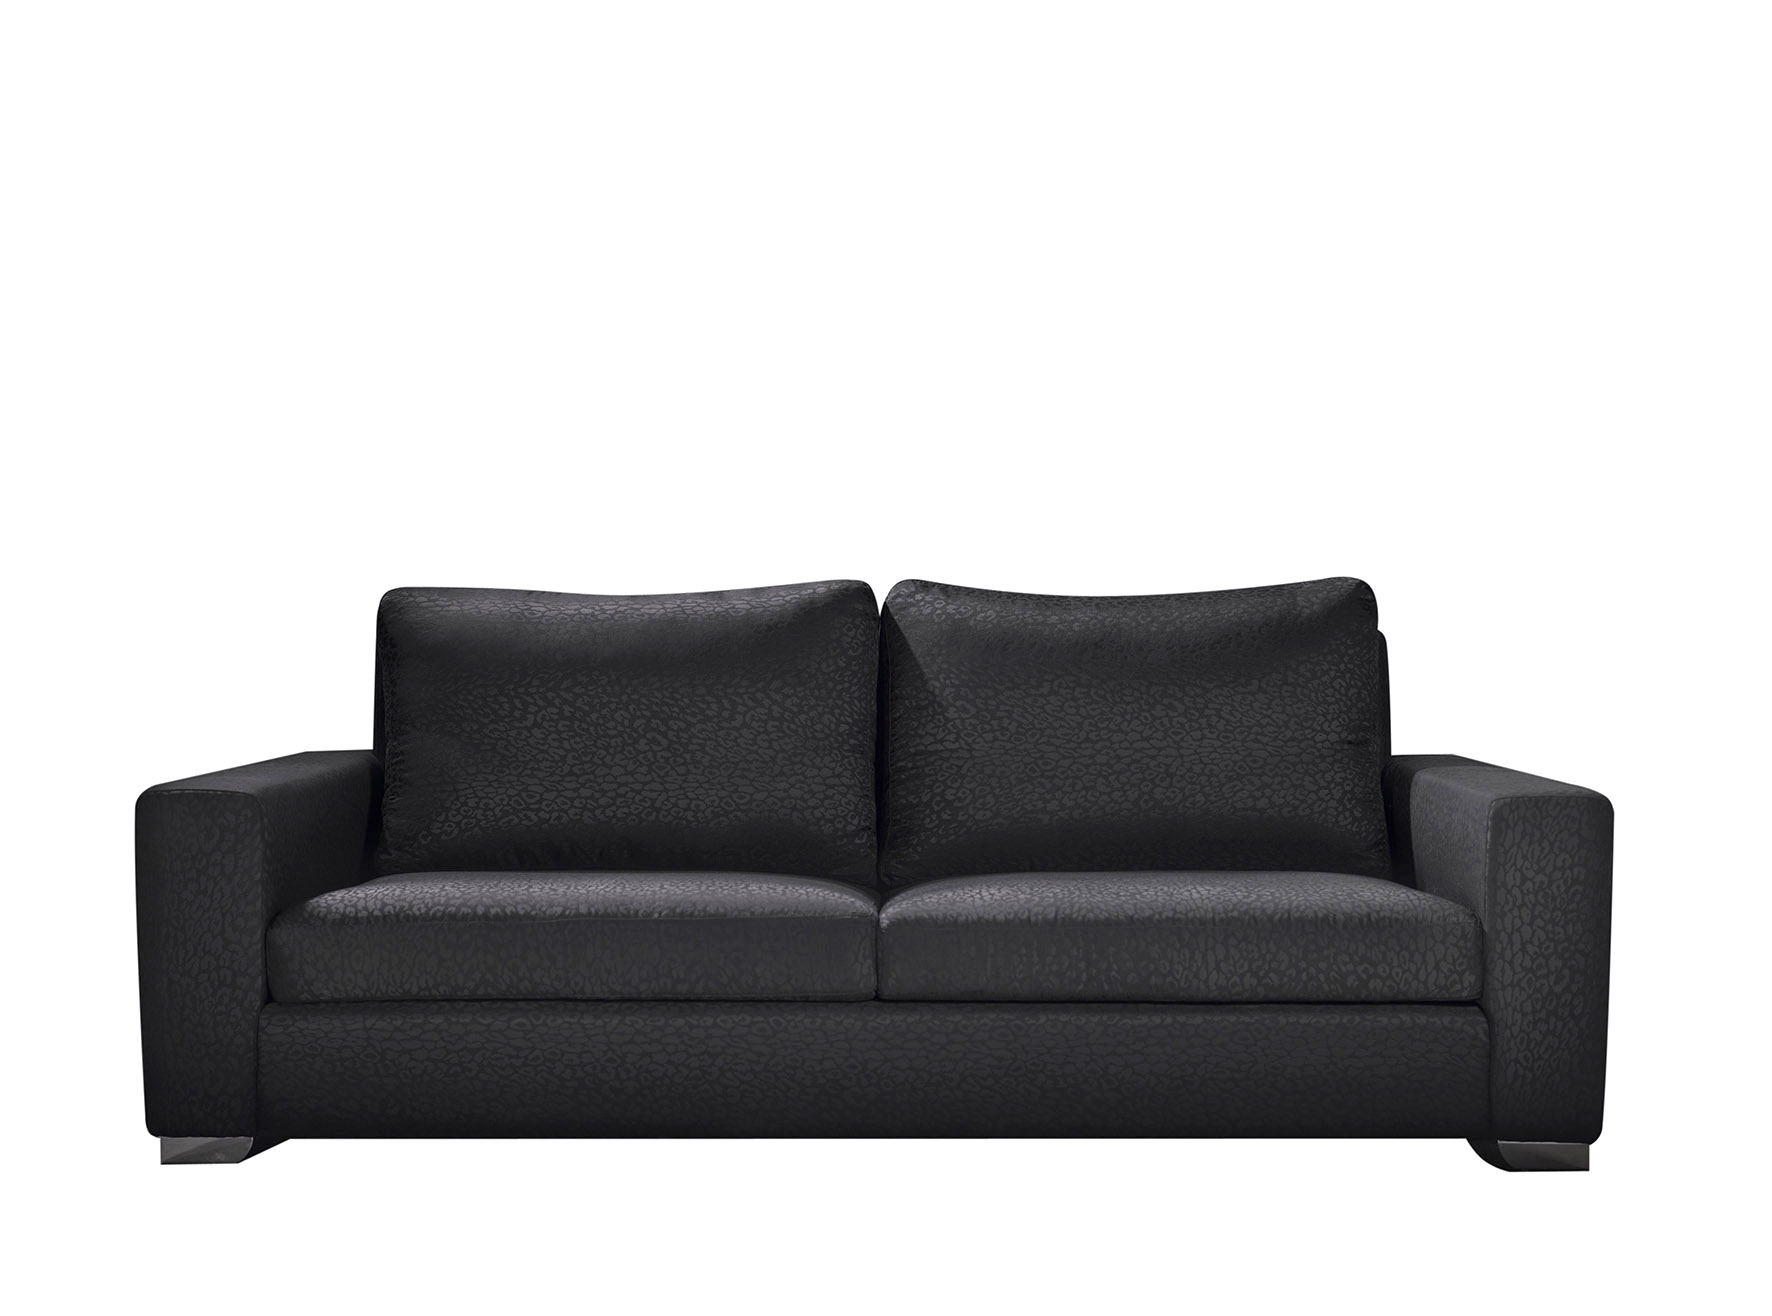 Contemporary luxury sofa